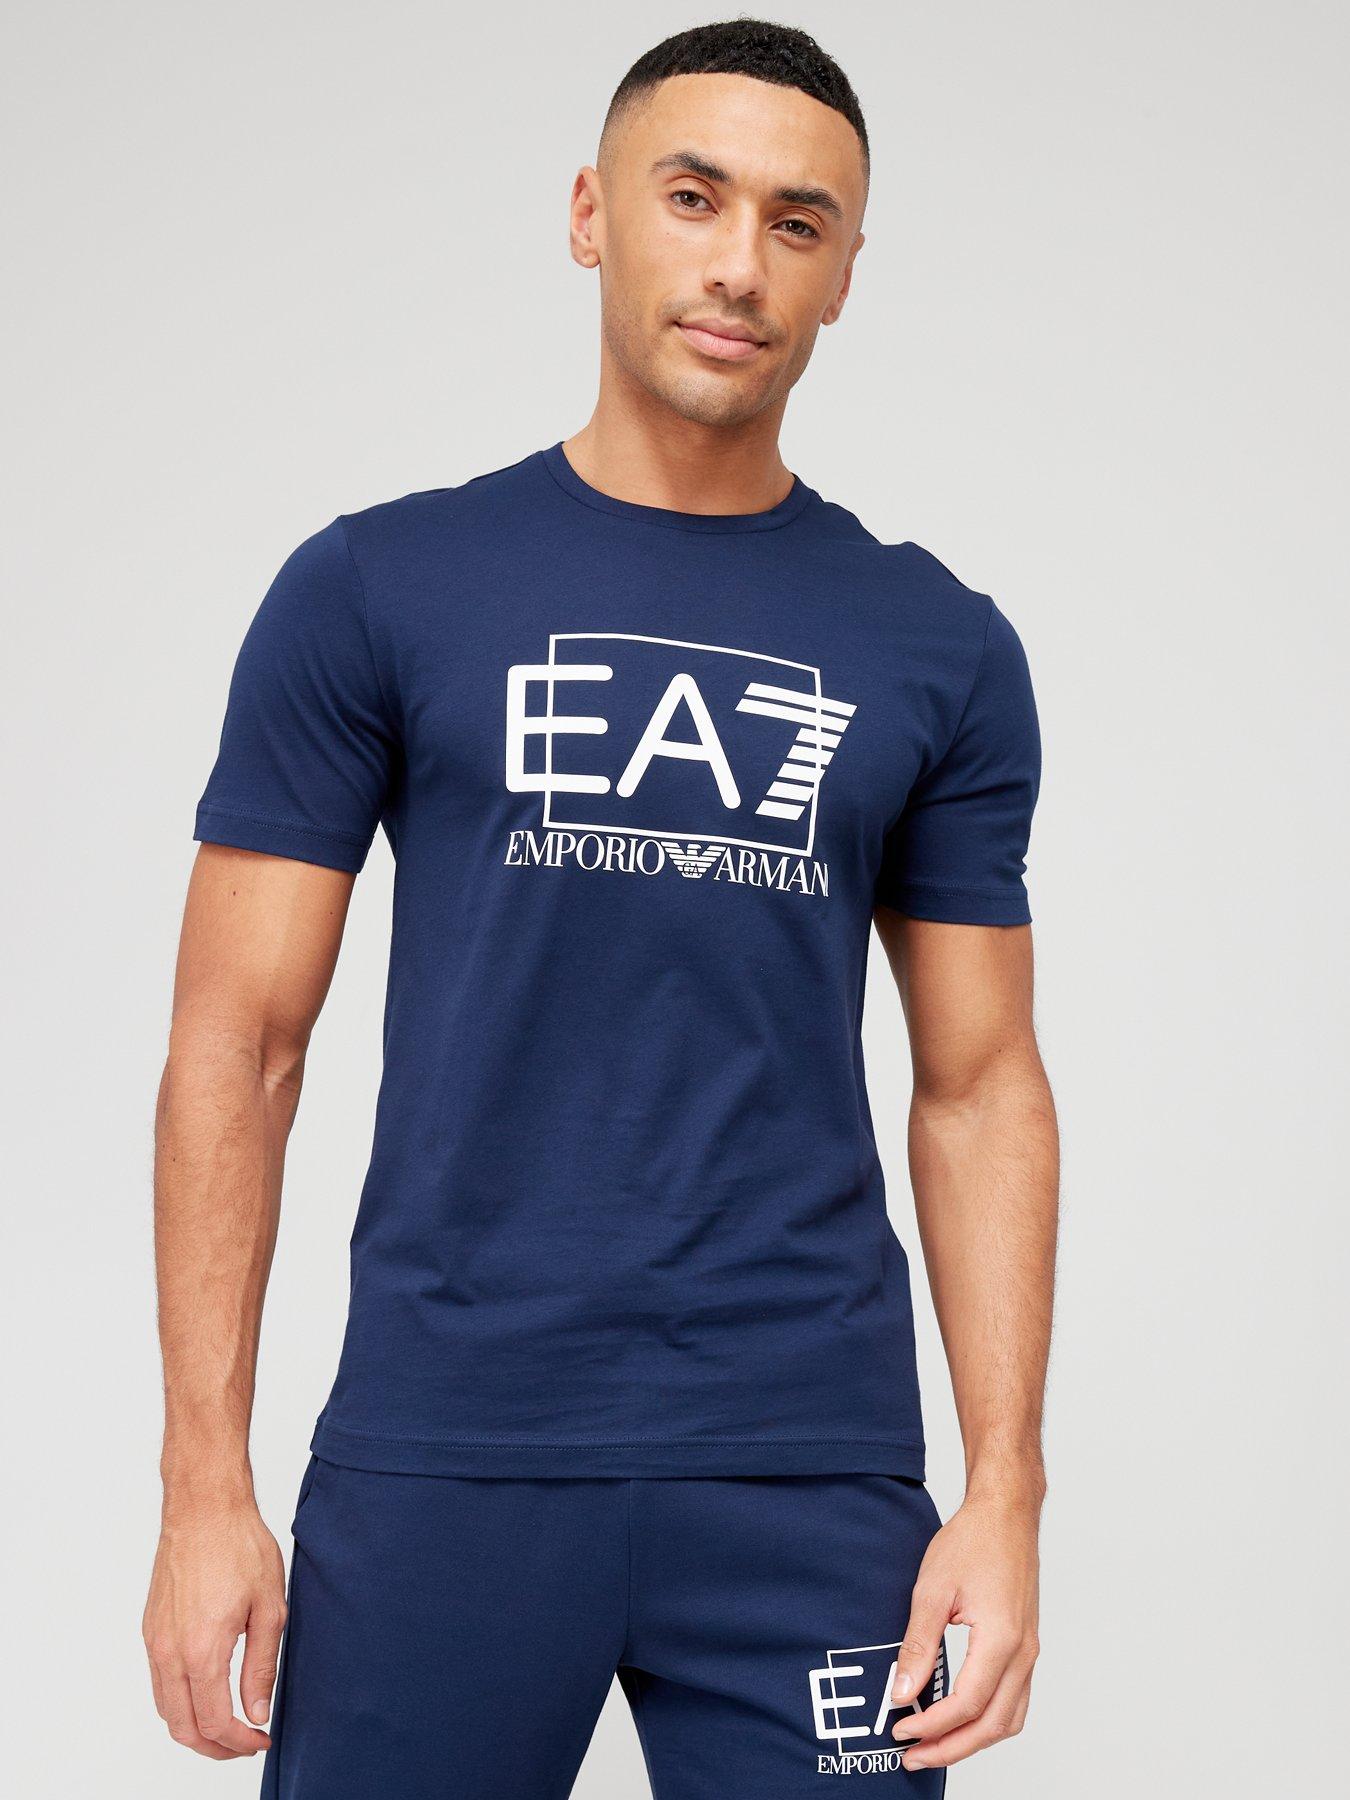 Ea7 emporio armani | T-shirts & polos | www.very.co.uk